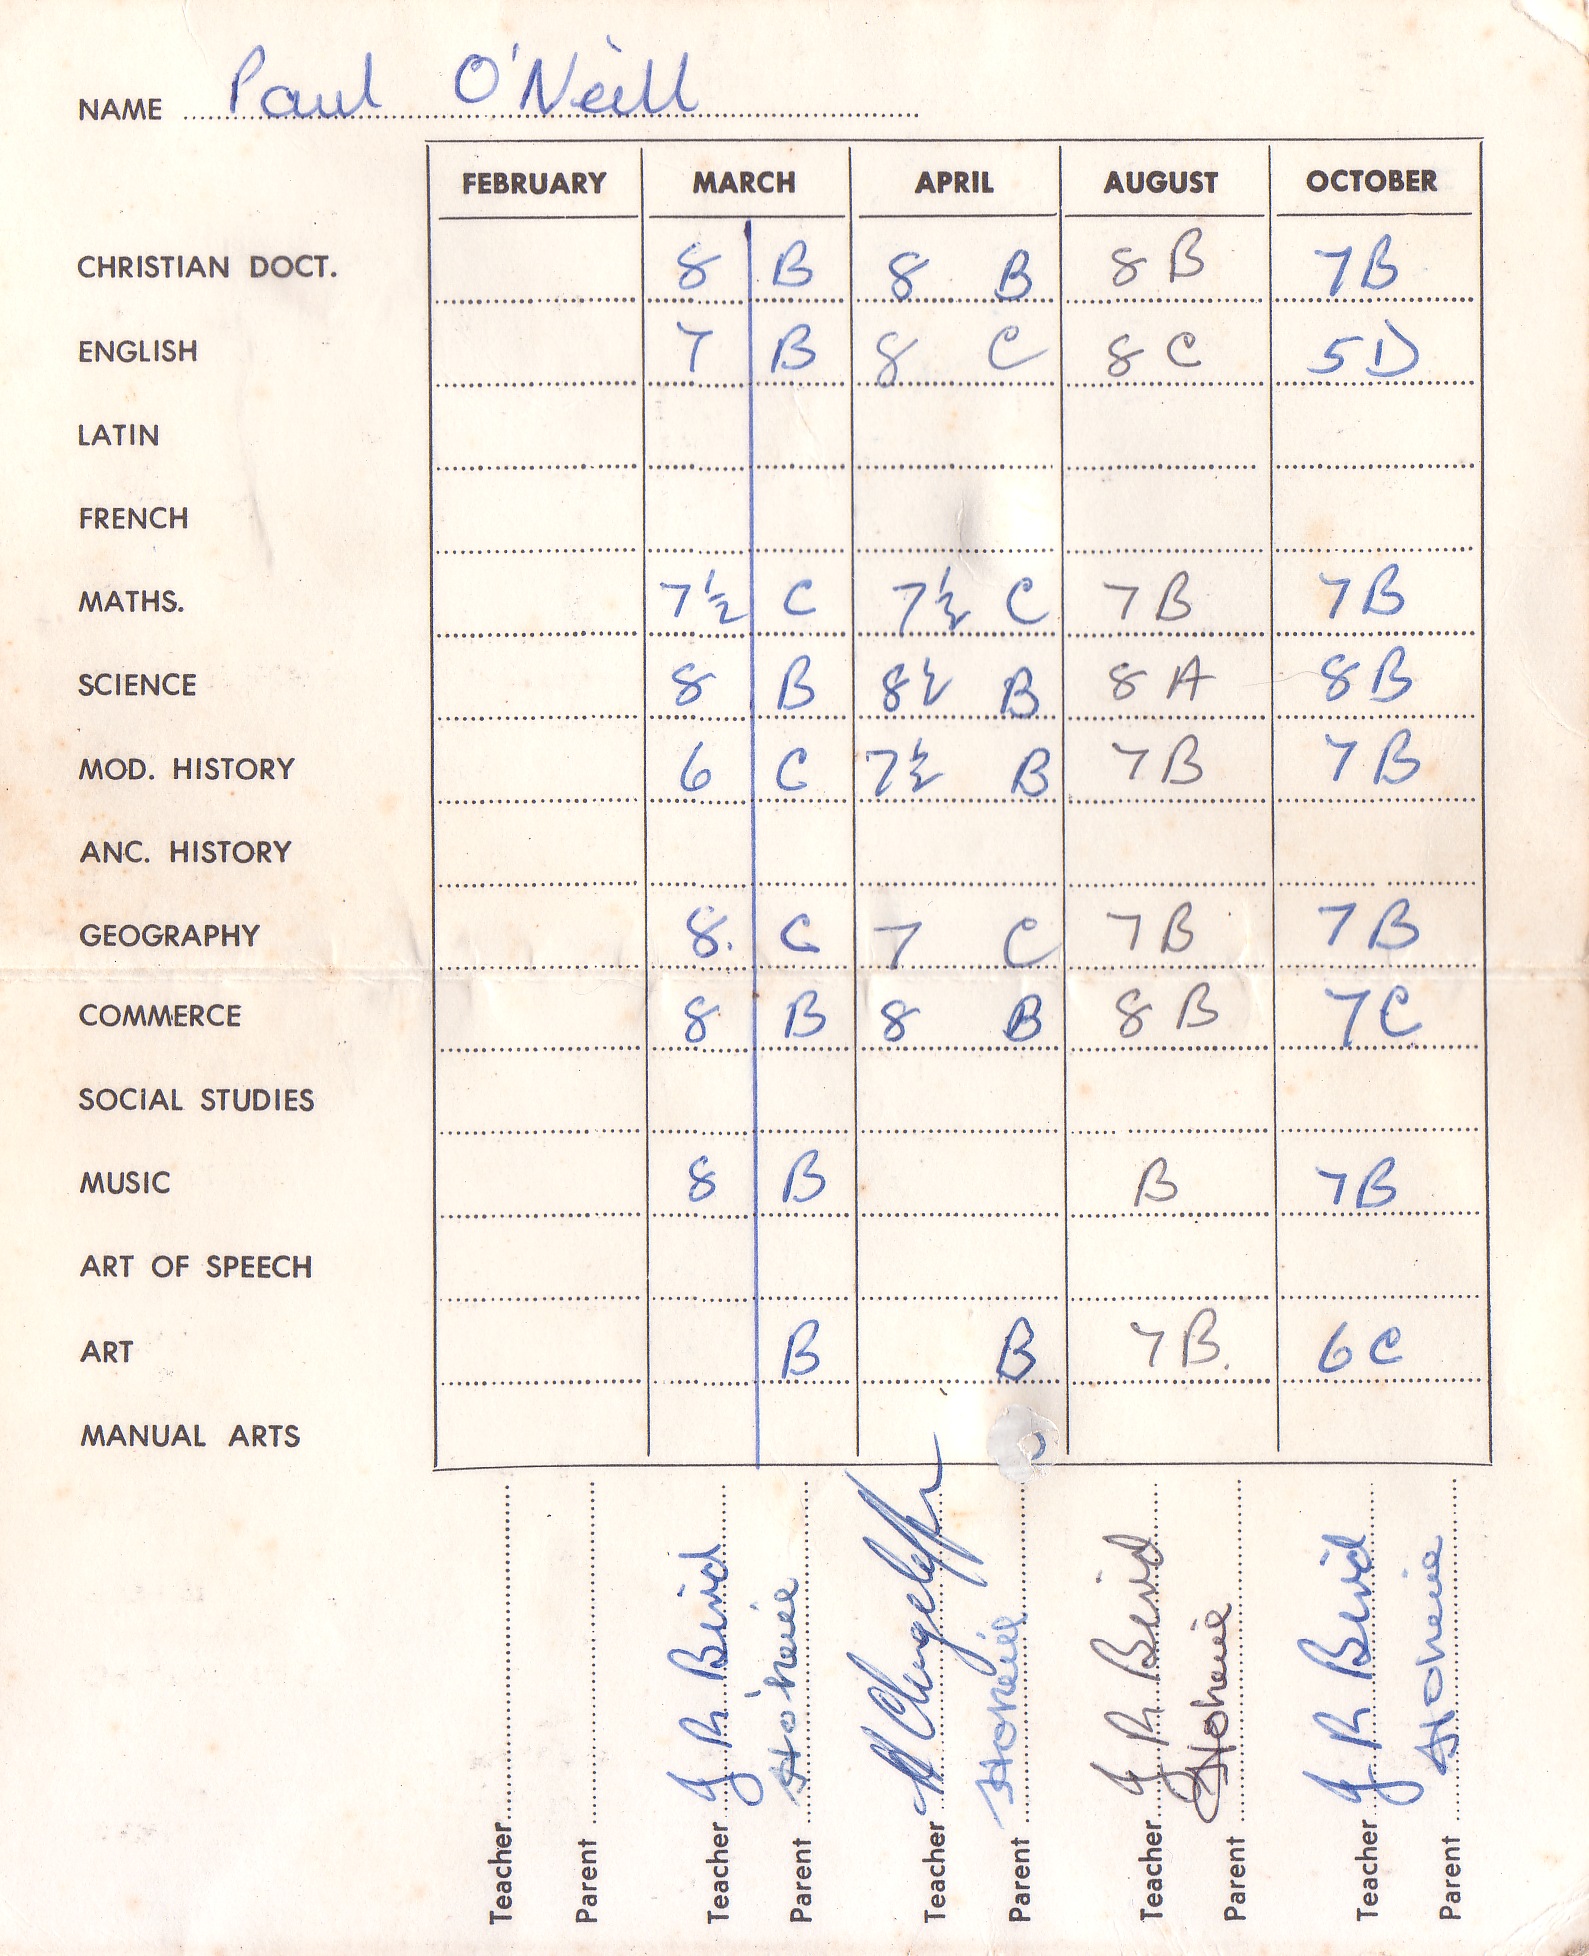 1977 - Class 9M progress report card